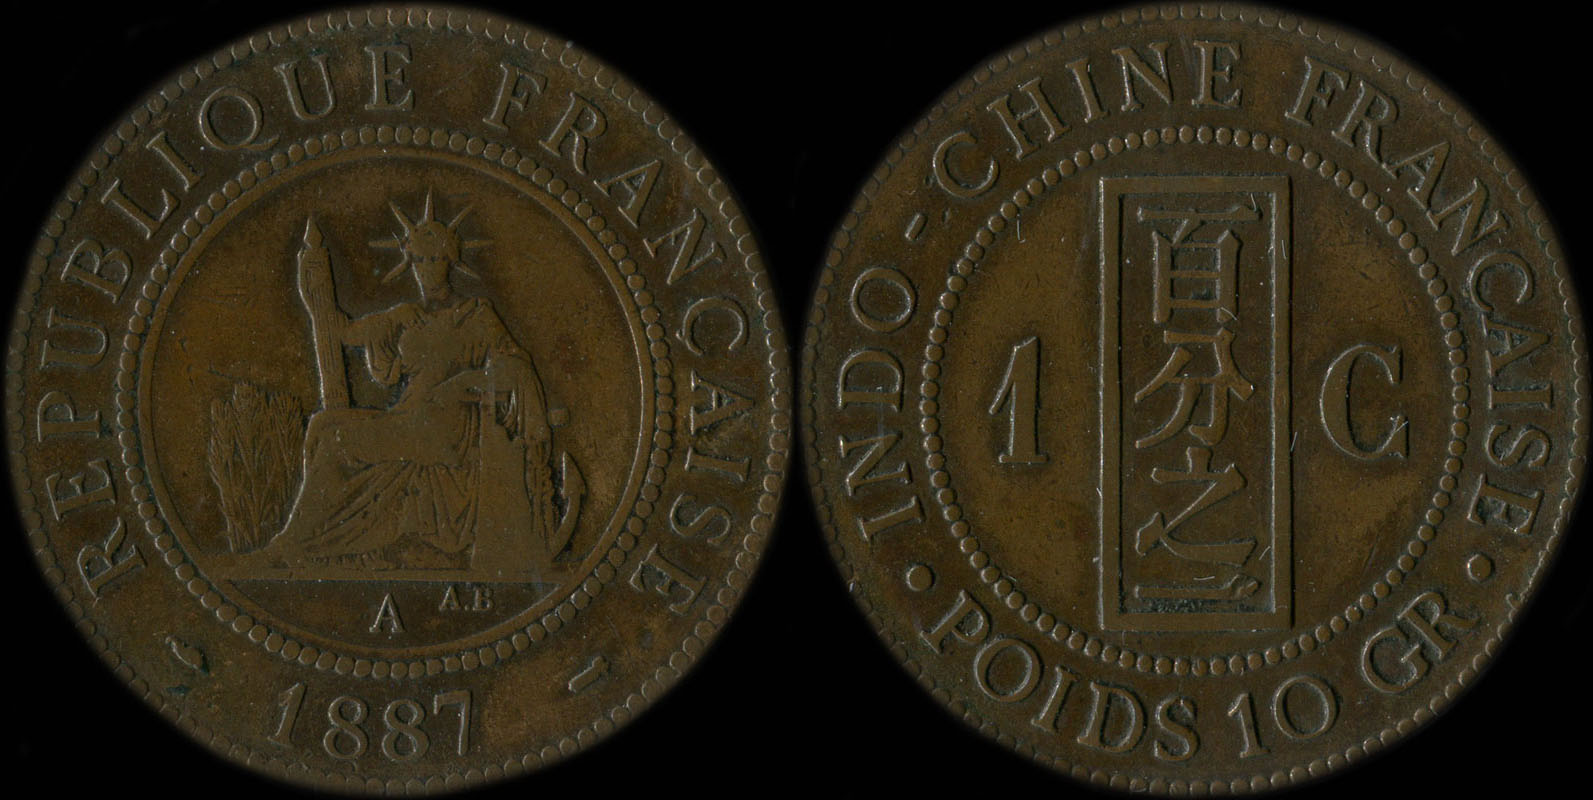 Pice de 1 centime Indochine 1887